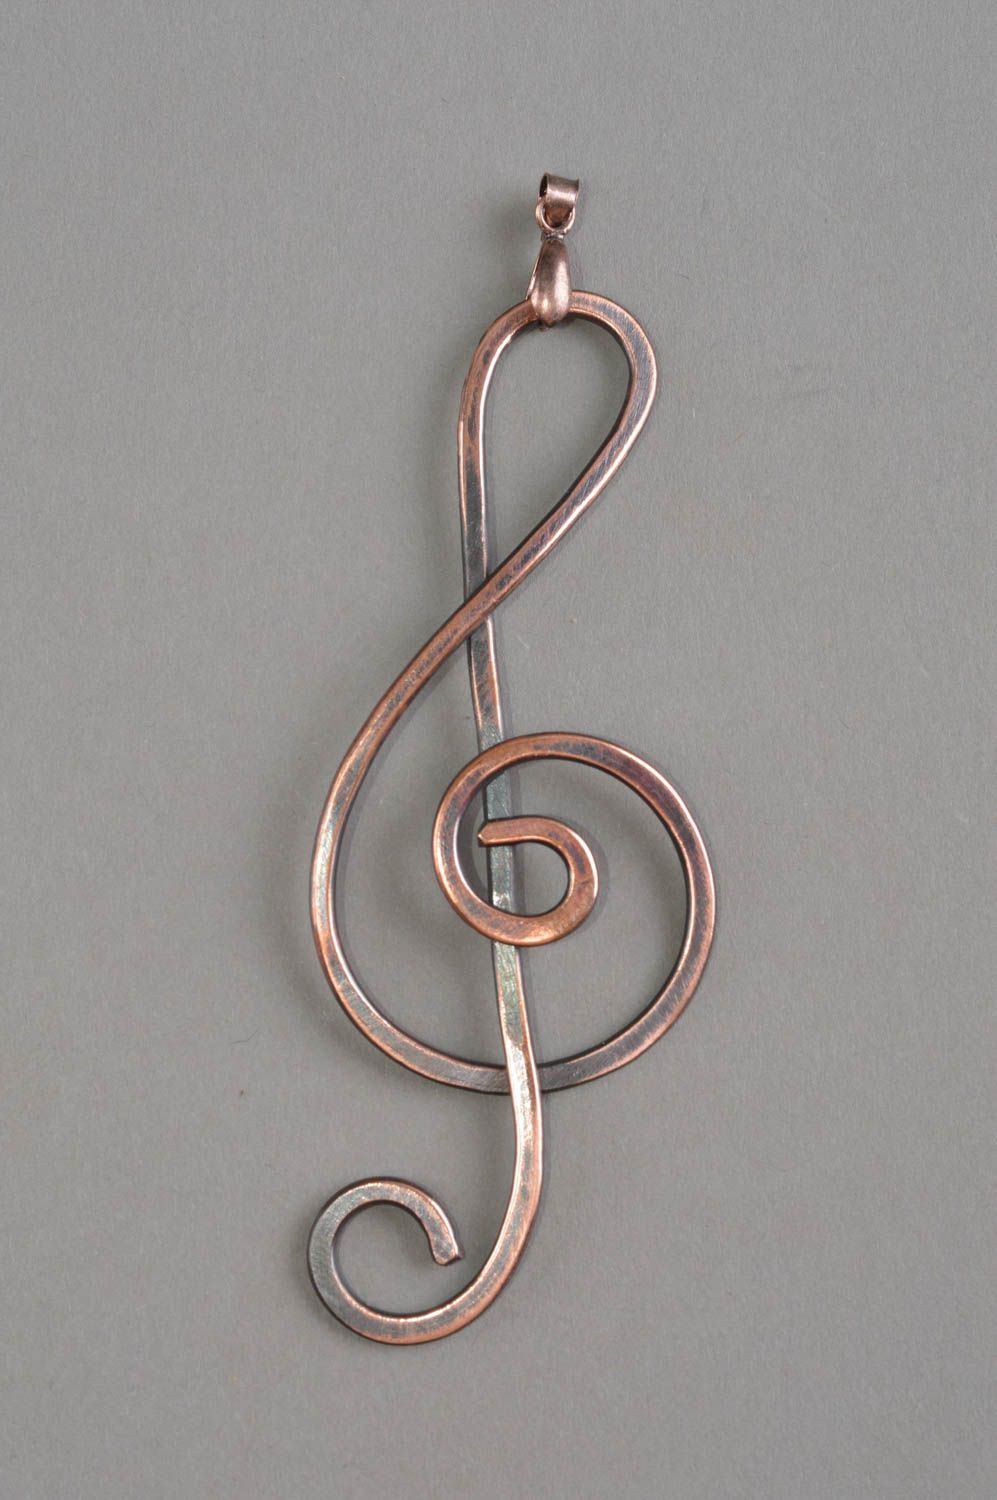 Treble clef necklace handmade copper pendant necklace fashion jewelry photo 2